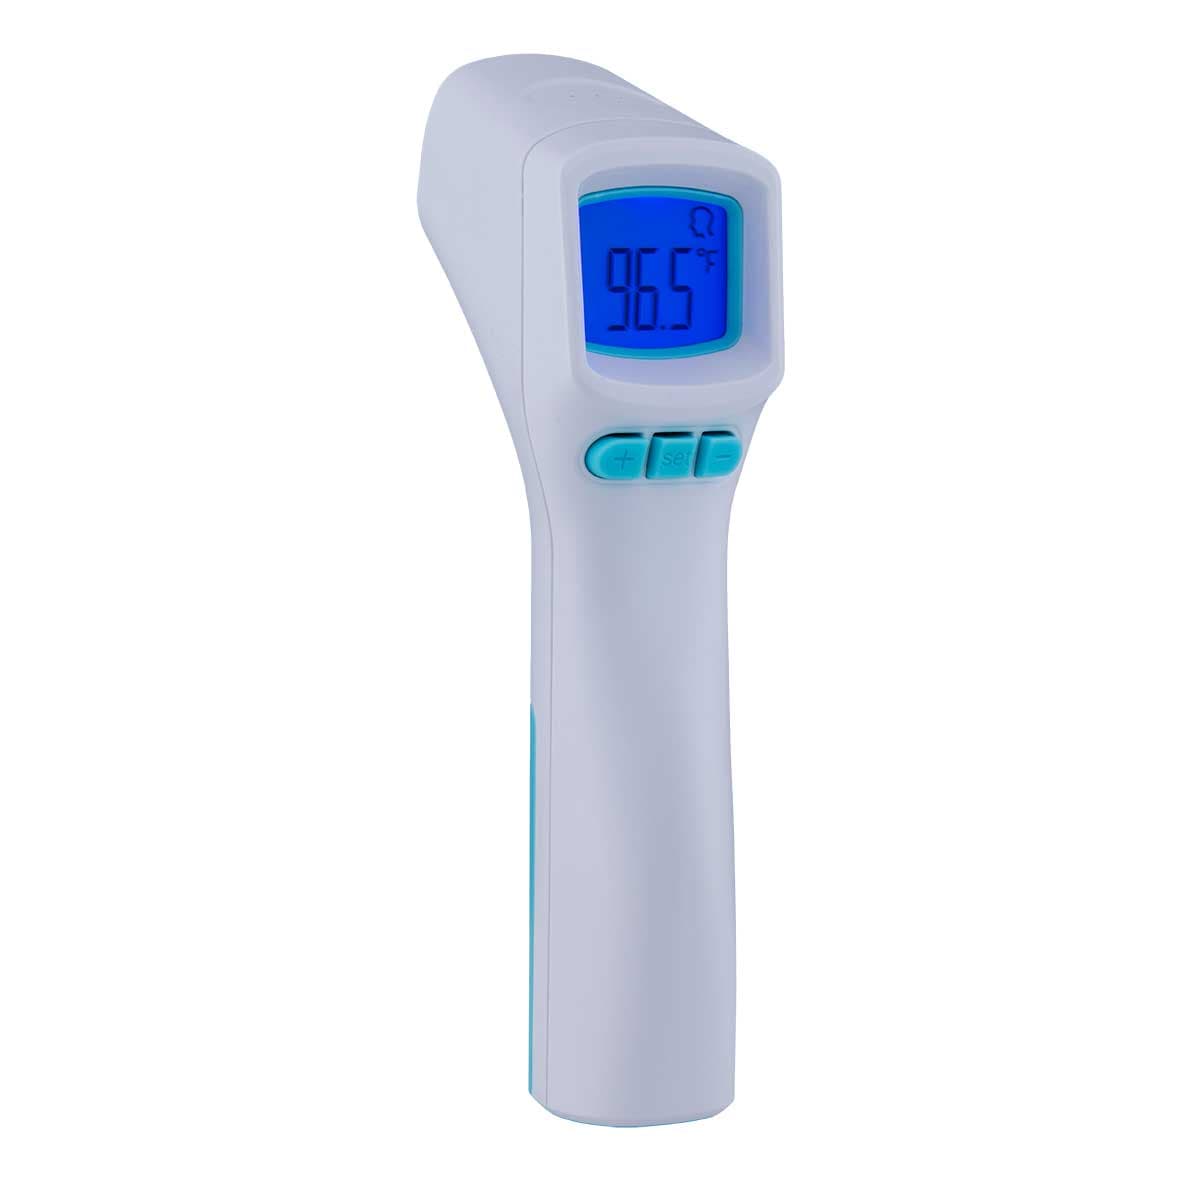 Digital Forehead Thermometer Infrared Gun, Non Contact Temperature